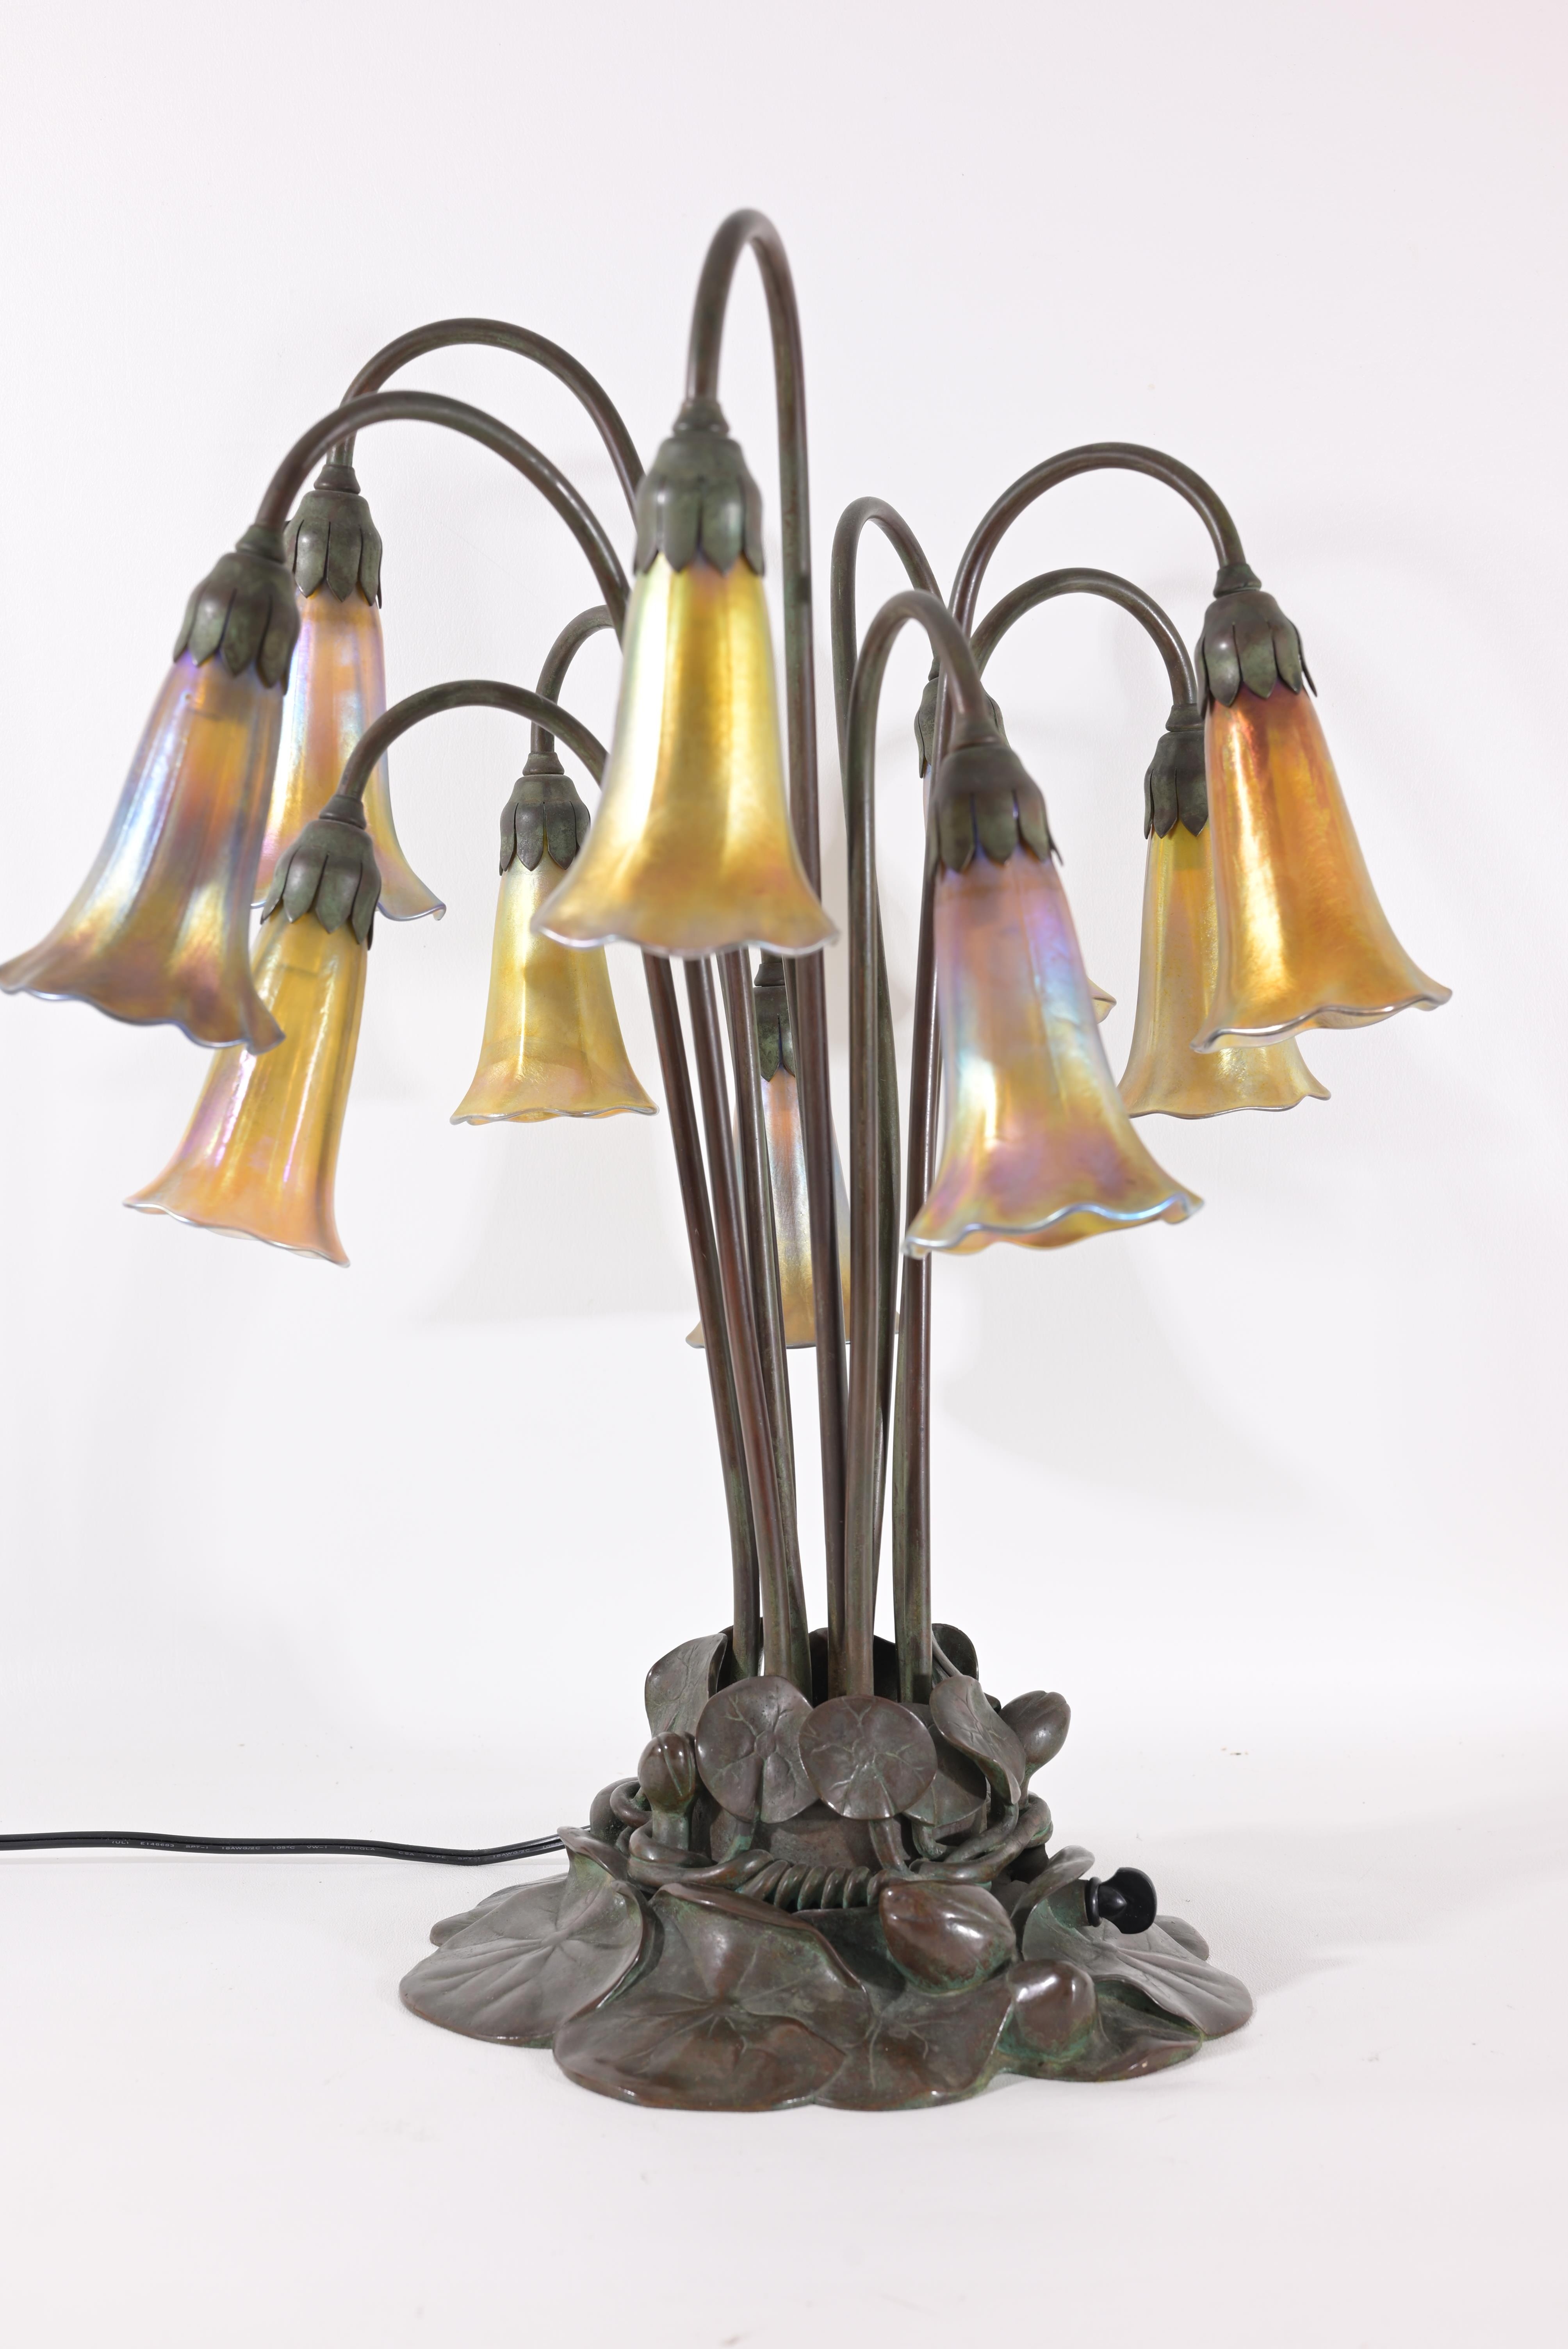 Tiffany Studios Ten Light Lily Lamp - Image 4 of 11